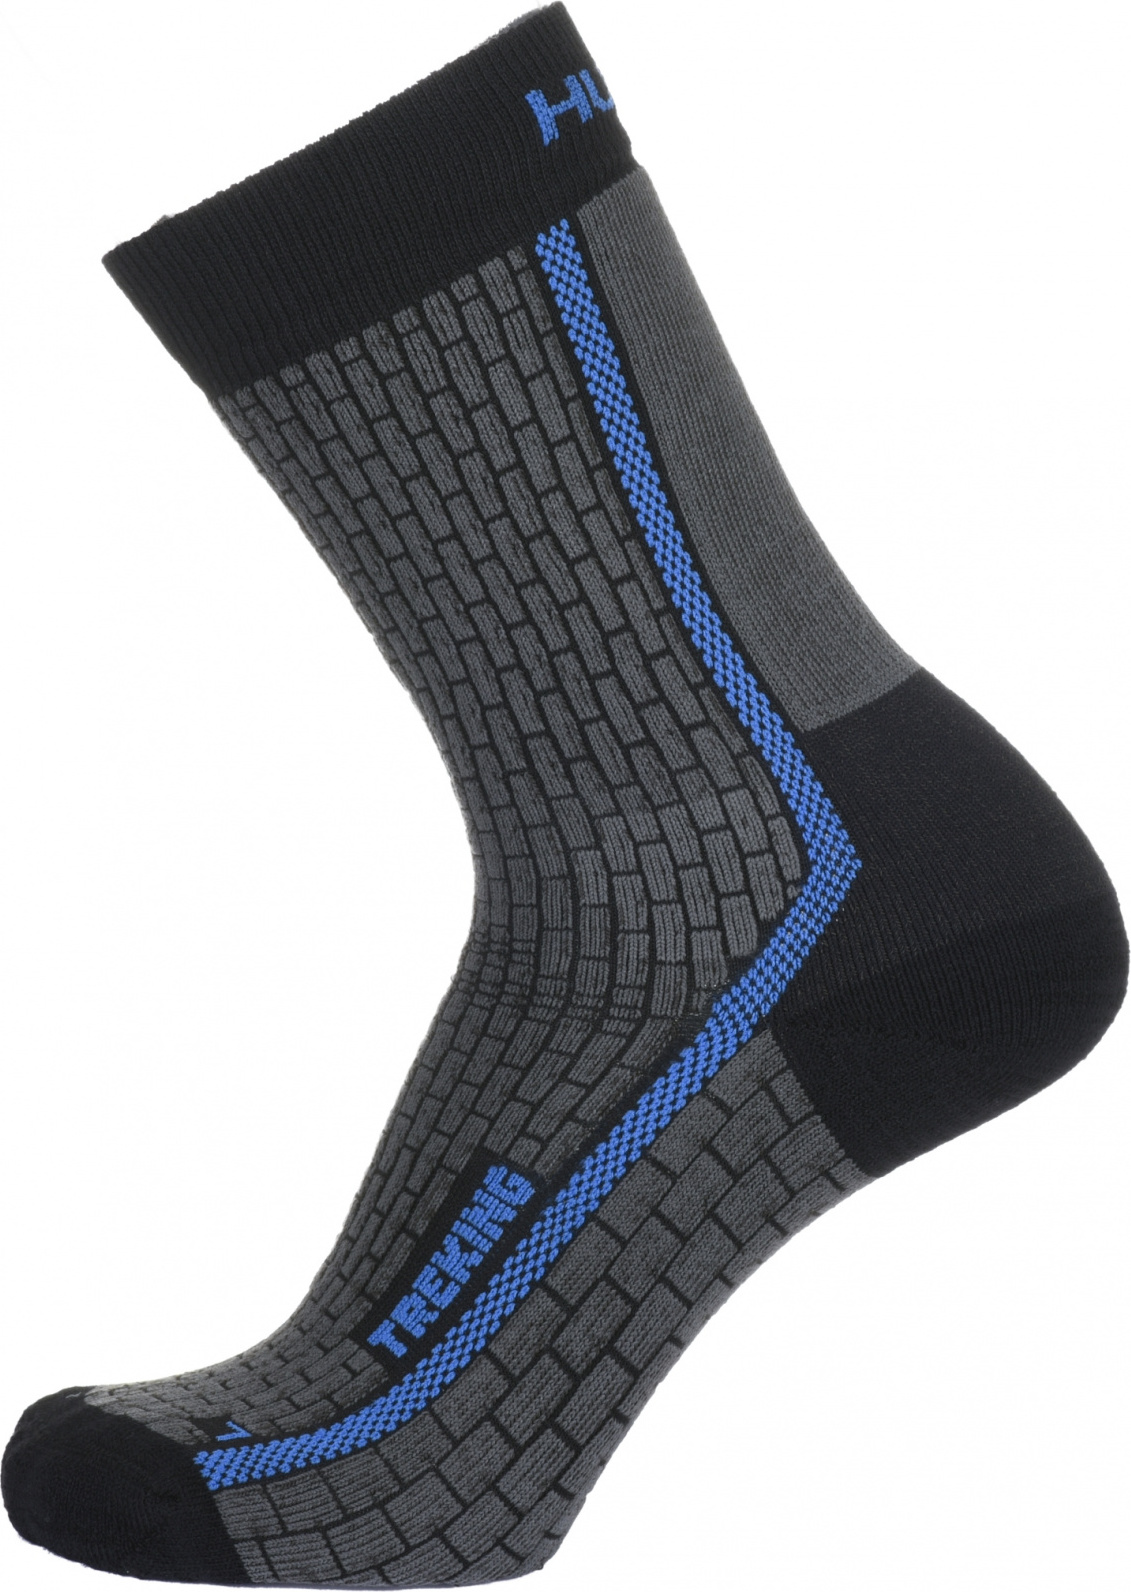 Ponožky HUSKY Treking antracit/modrá Velikost: M (36-40)